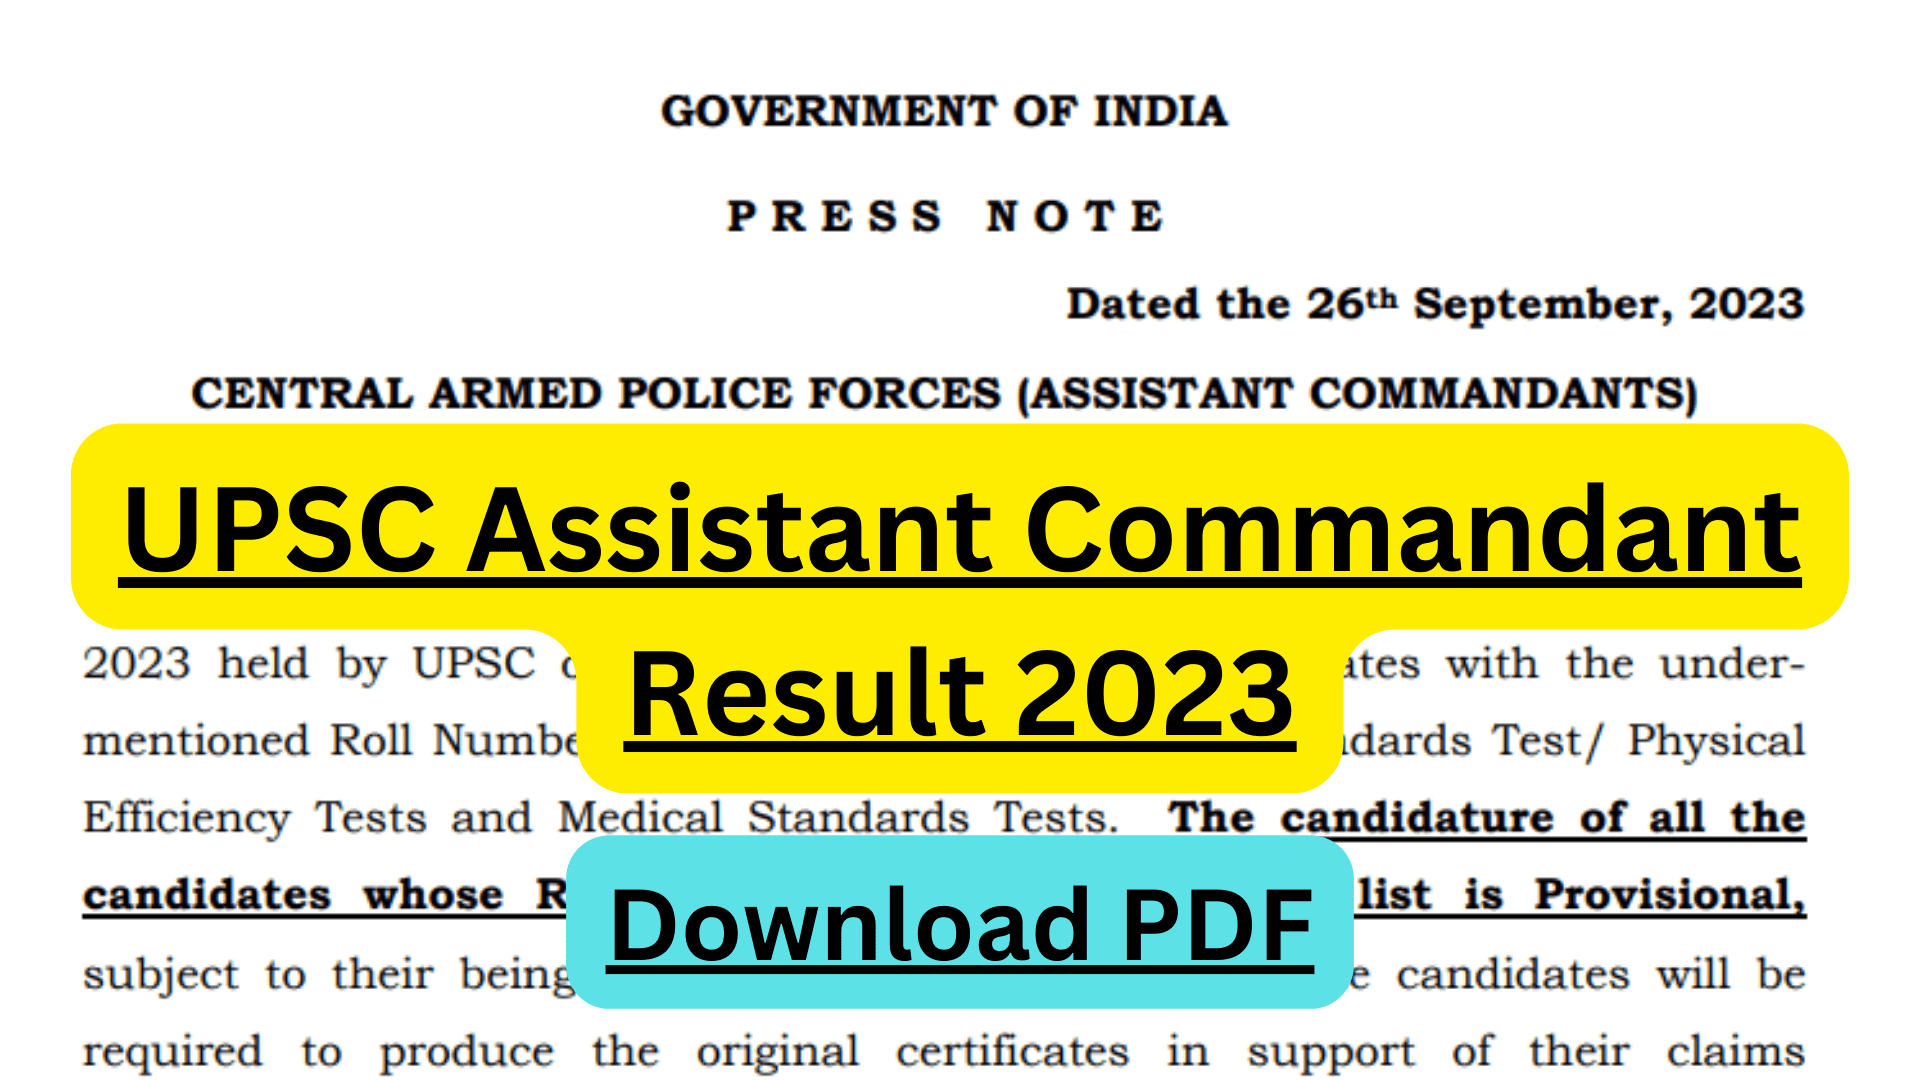 UPSC Assistant Commandant Result 2023